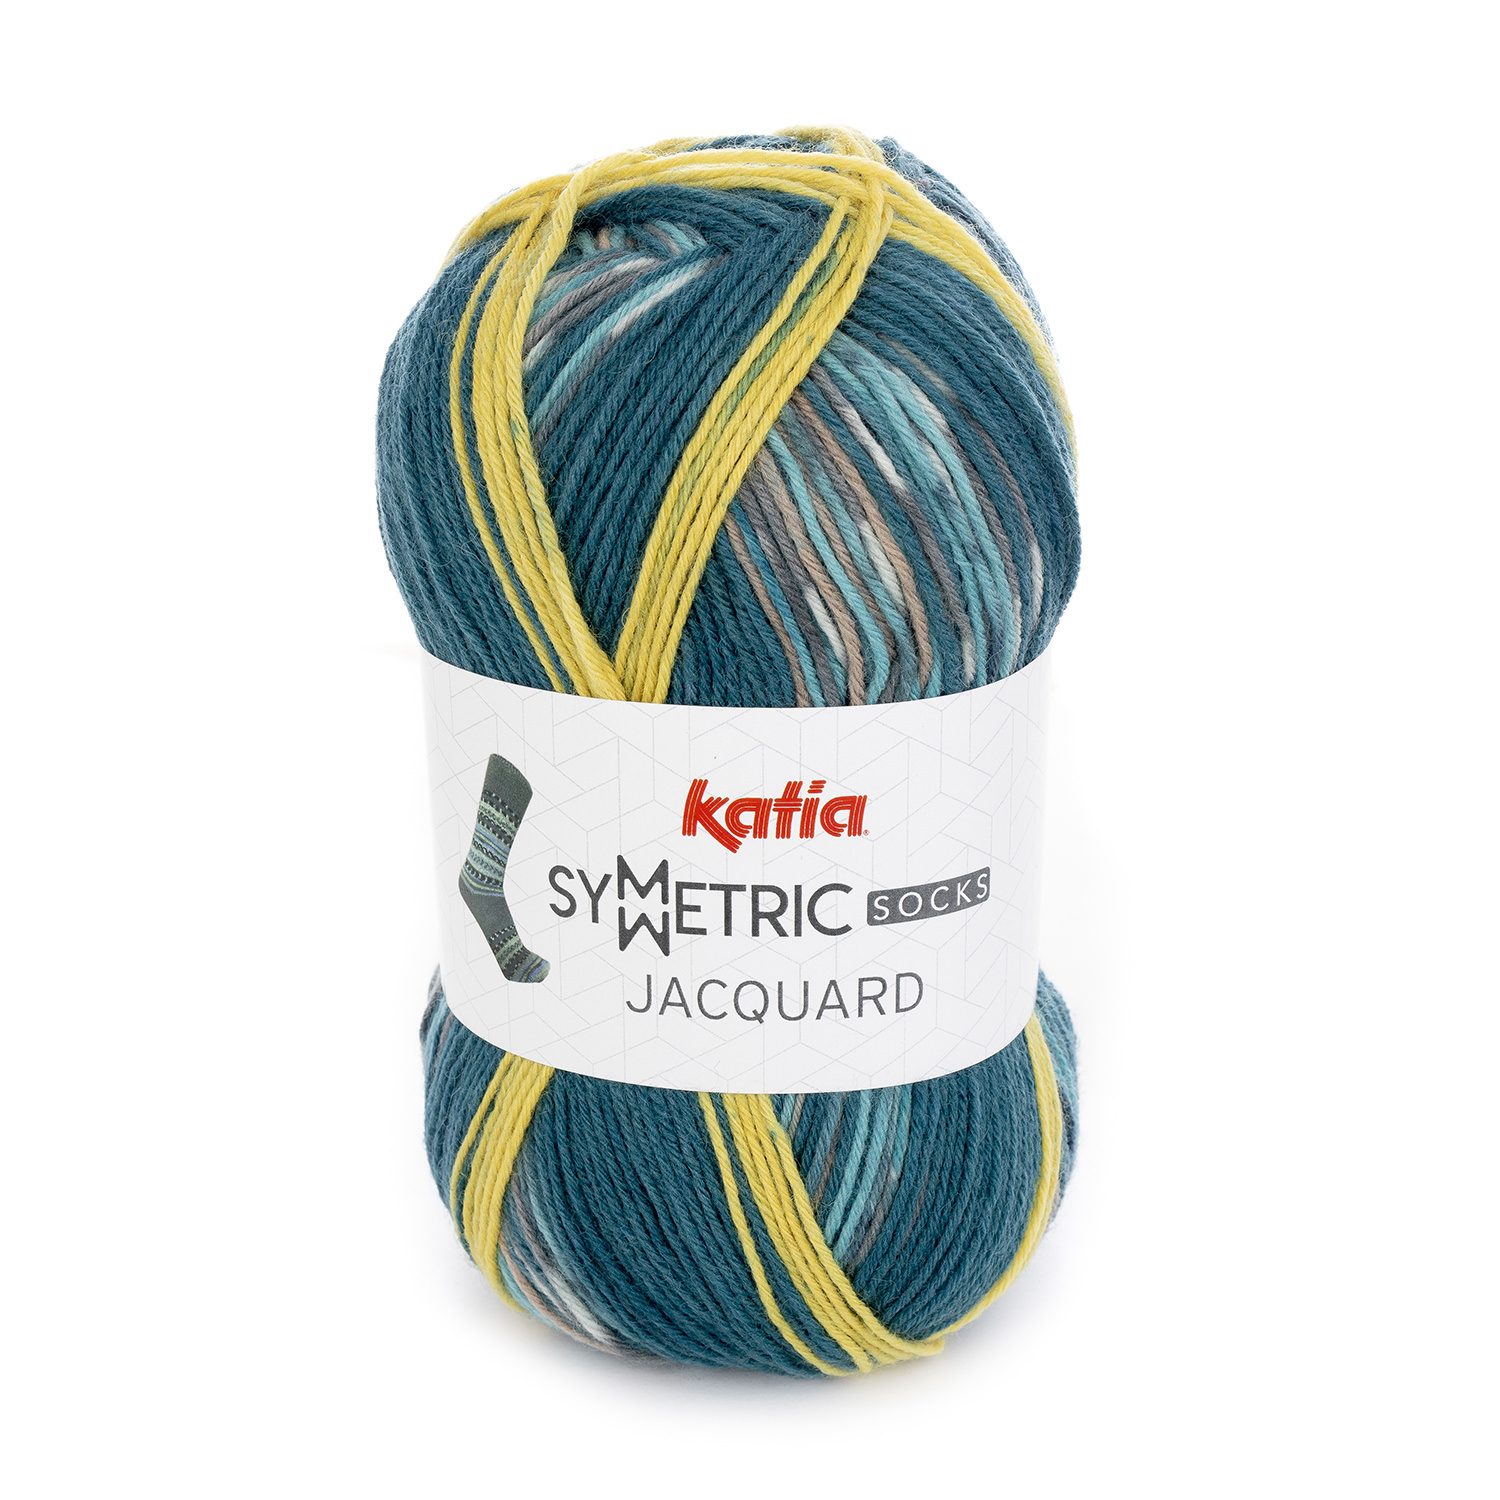 yarn-wool-jacquardsymmetricsocks-knit-superwash-wool-polyamide-green-blue-turquoise-autumn-winter-katia-96-g